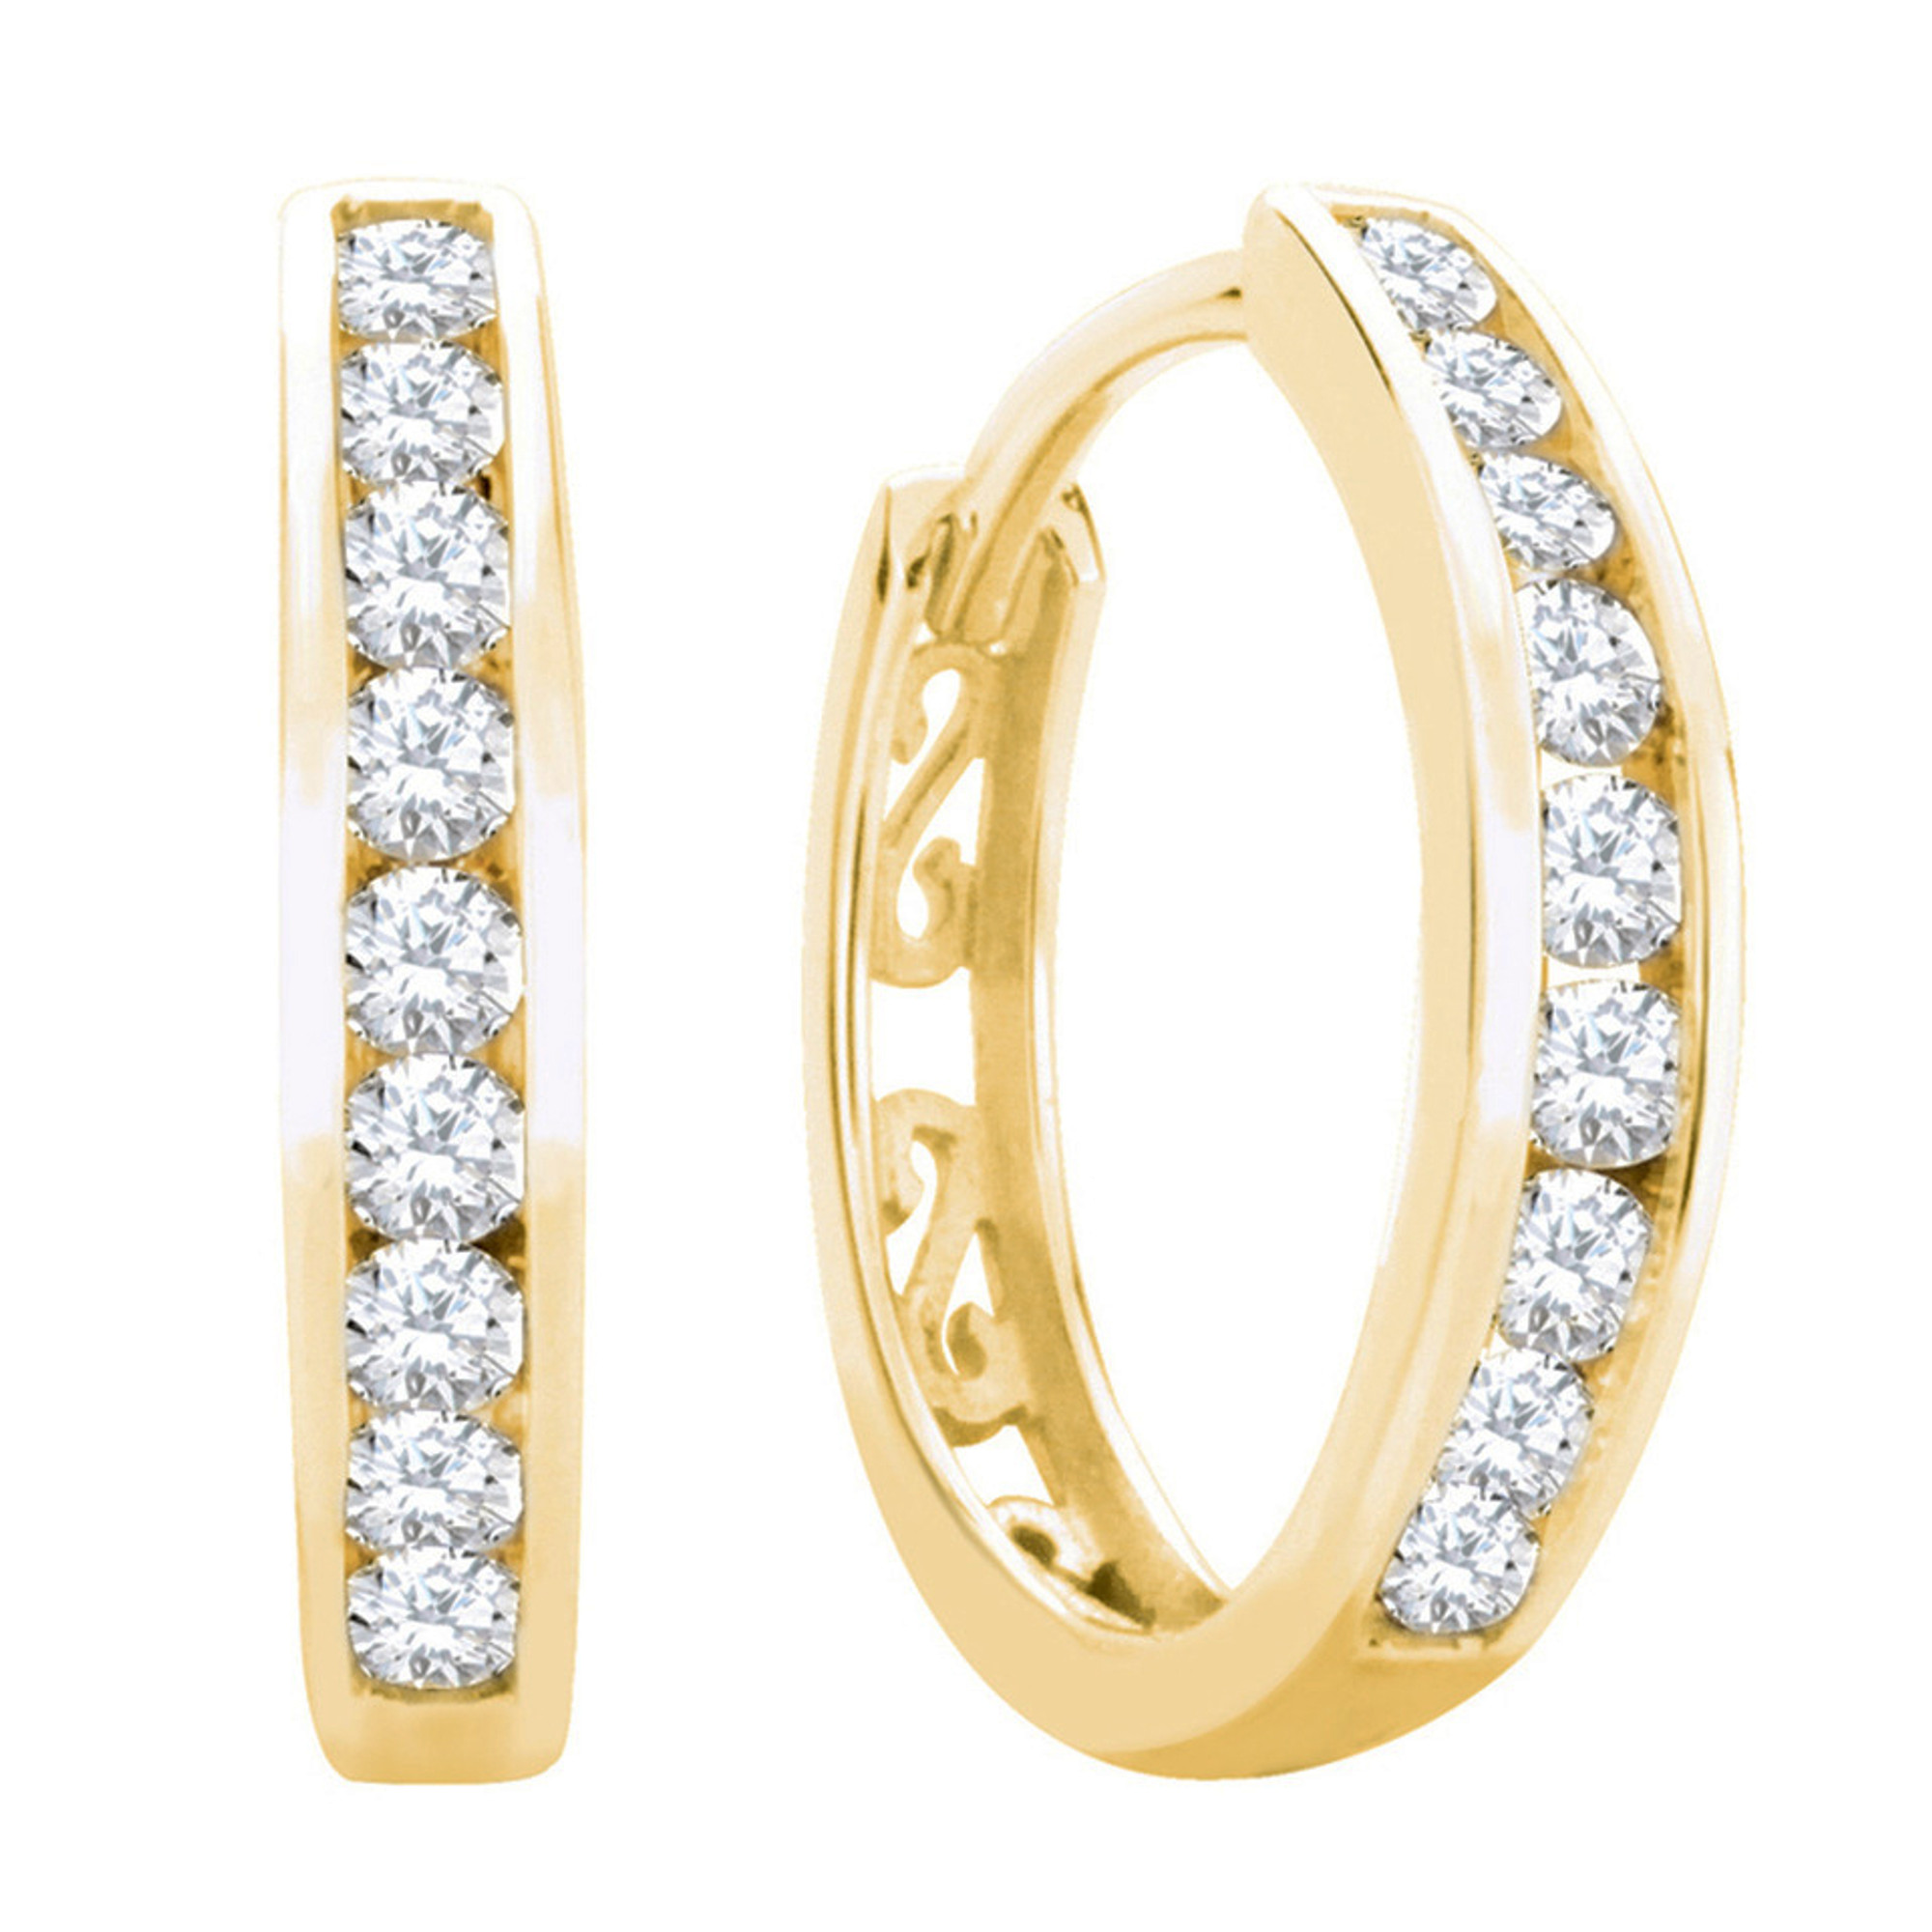 Update more than 216 gold diamond earrings super hot